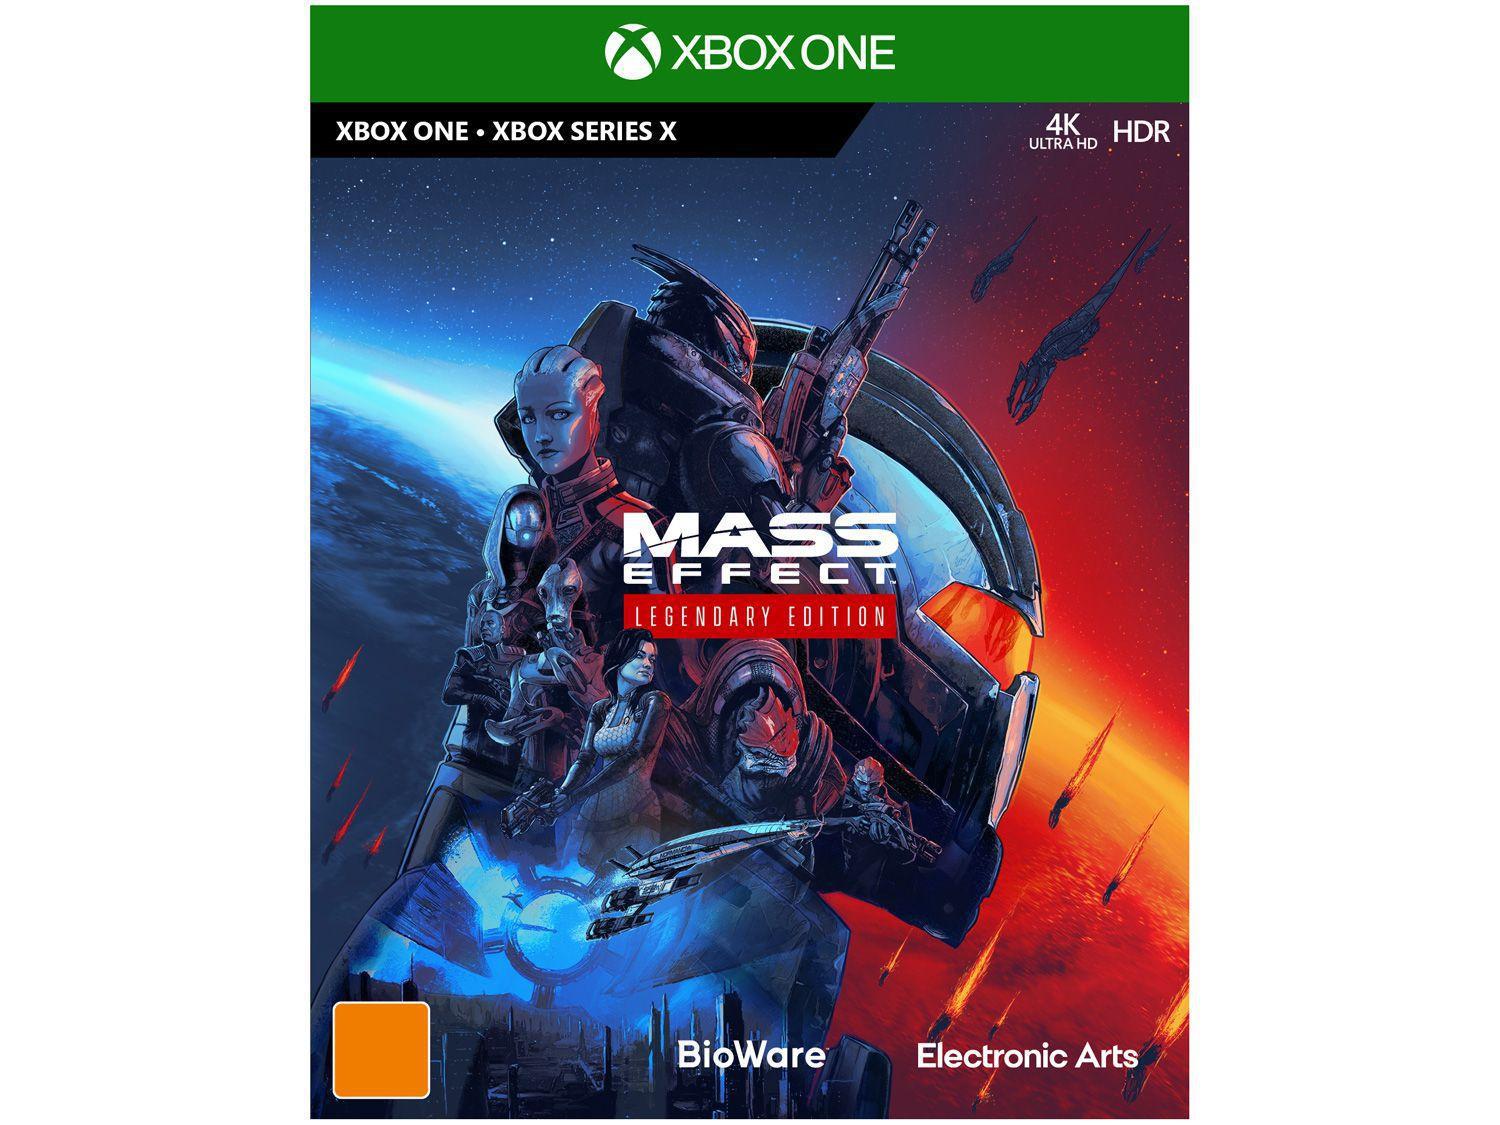 Jogo Mass Effect Legendary Edition - Xbox One